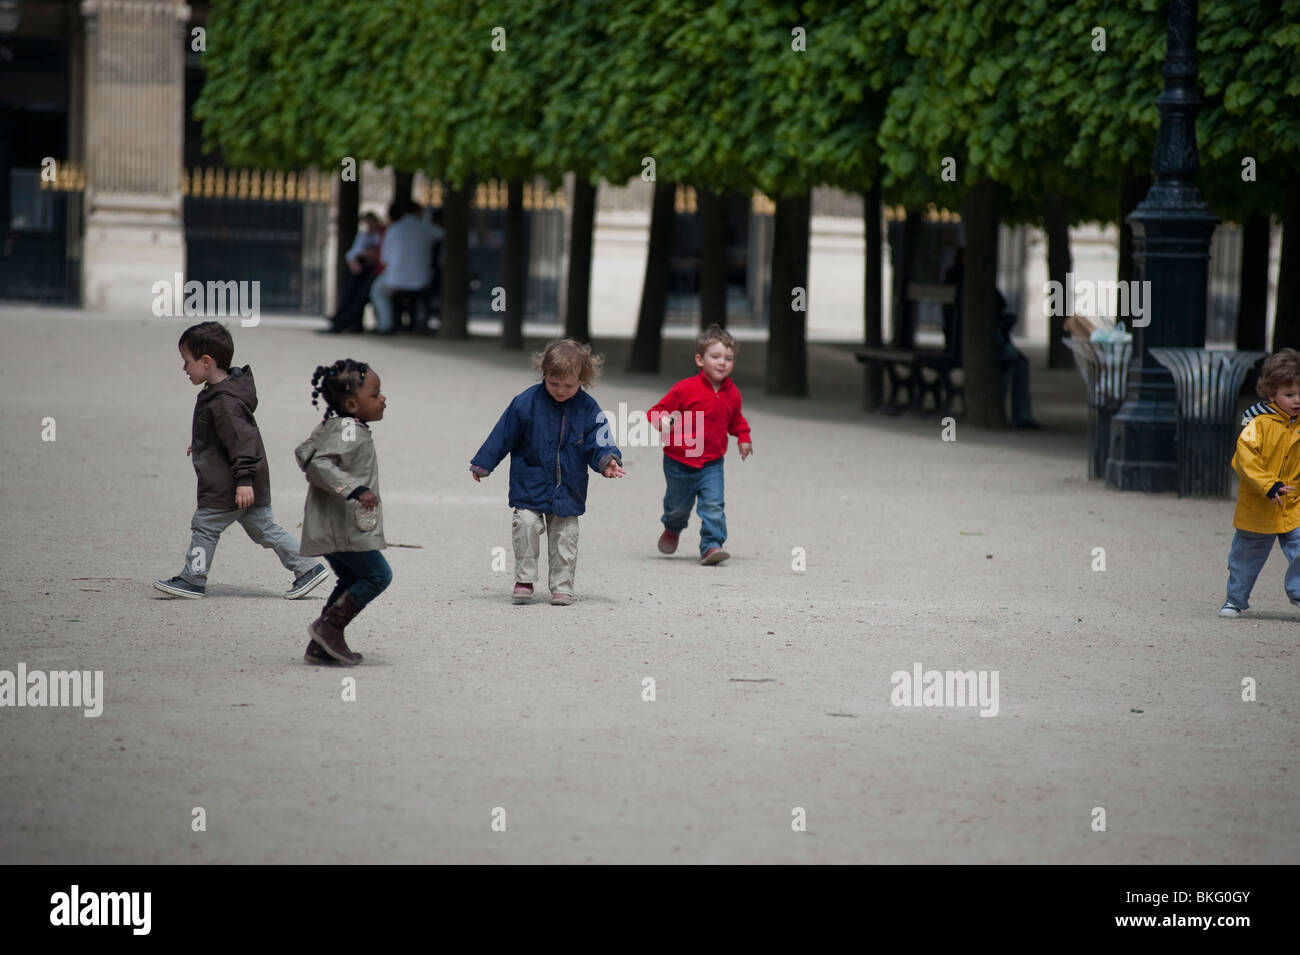 Group of French Children Enjoying, Playing, in Urban Park, 'Jardin du Palais Royale', Gardens, Paris, France, diverse people group Stock Photo